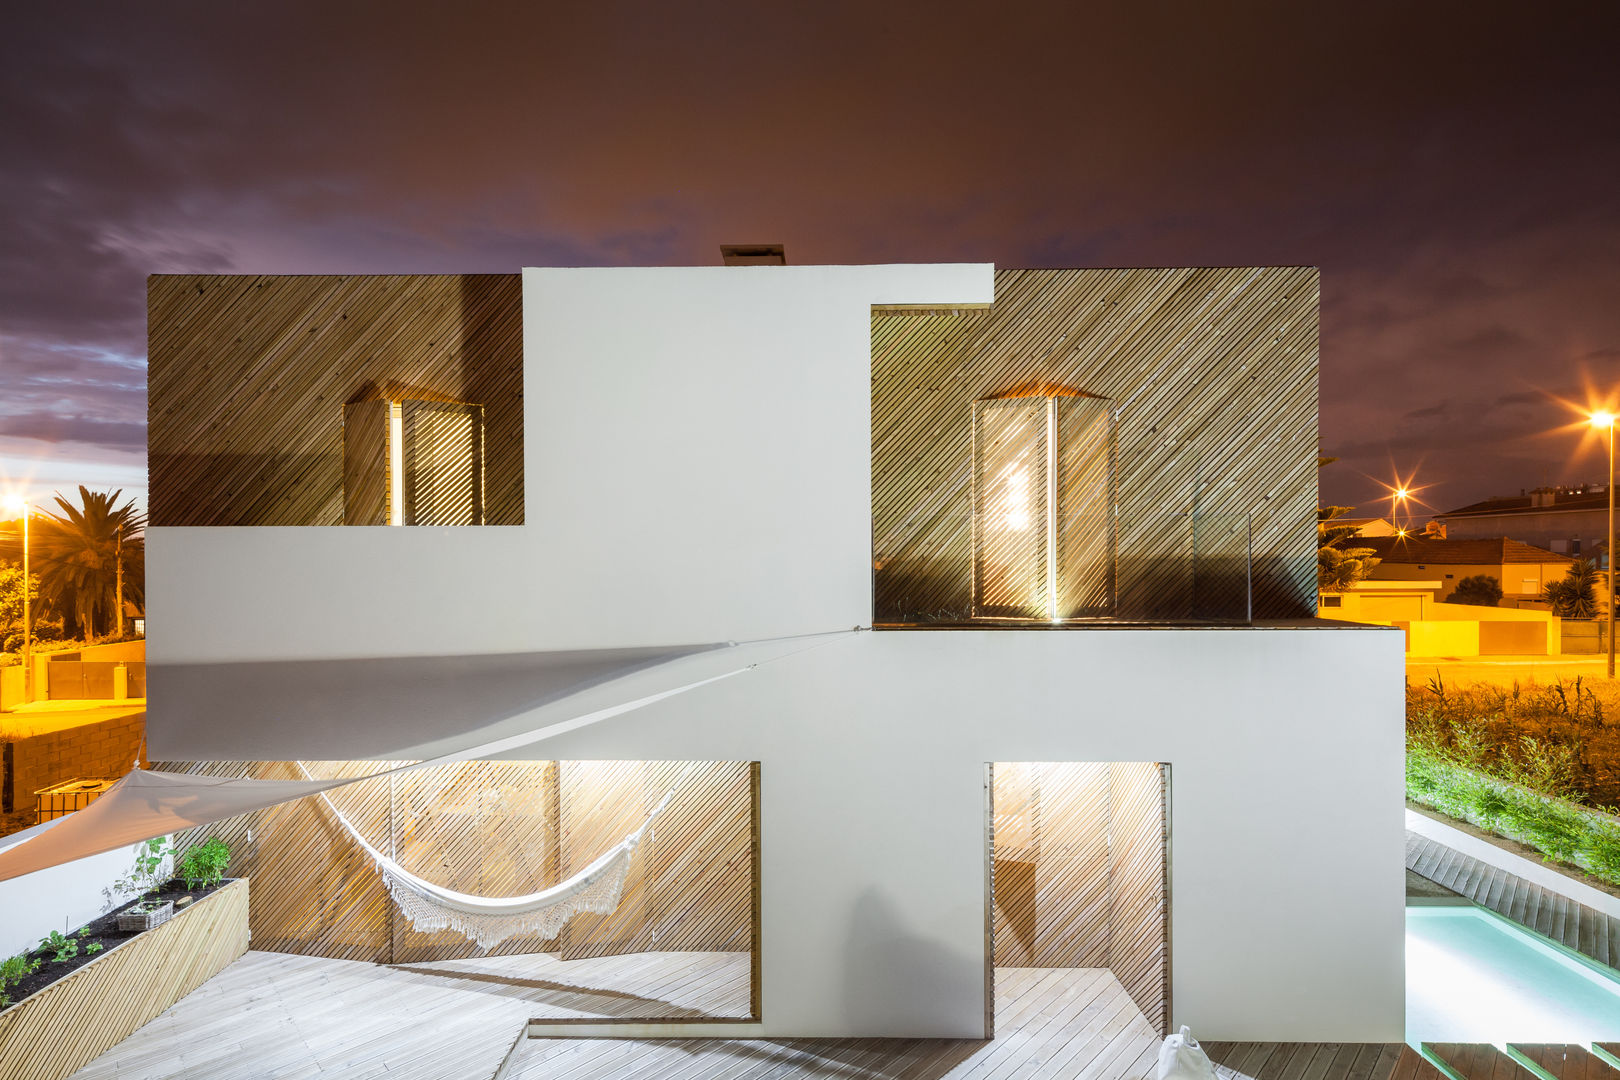 SilverWoodHouse, Joao Morgado - Architectural Photography Joao Morgado - Architectural Photography منازل